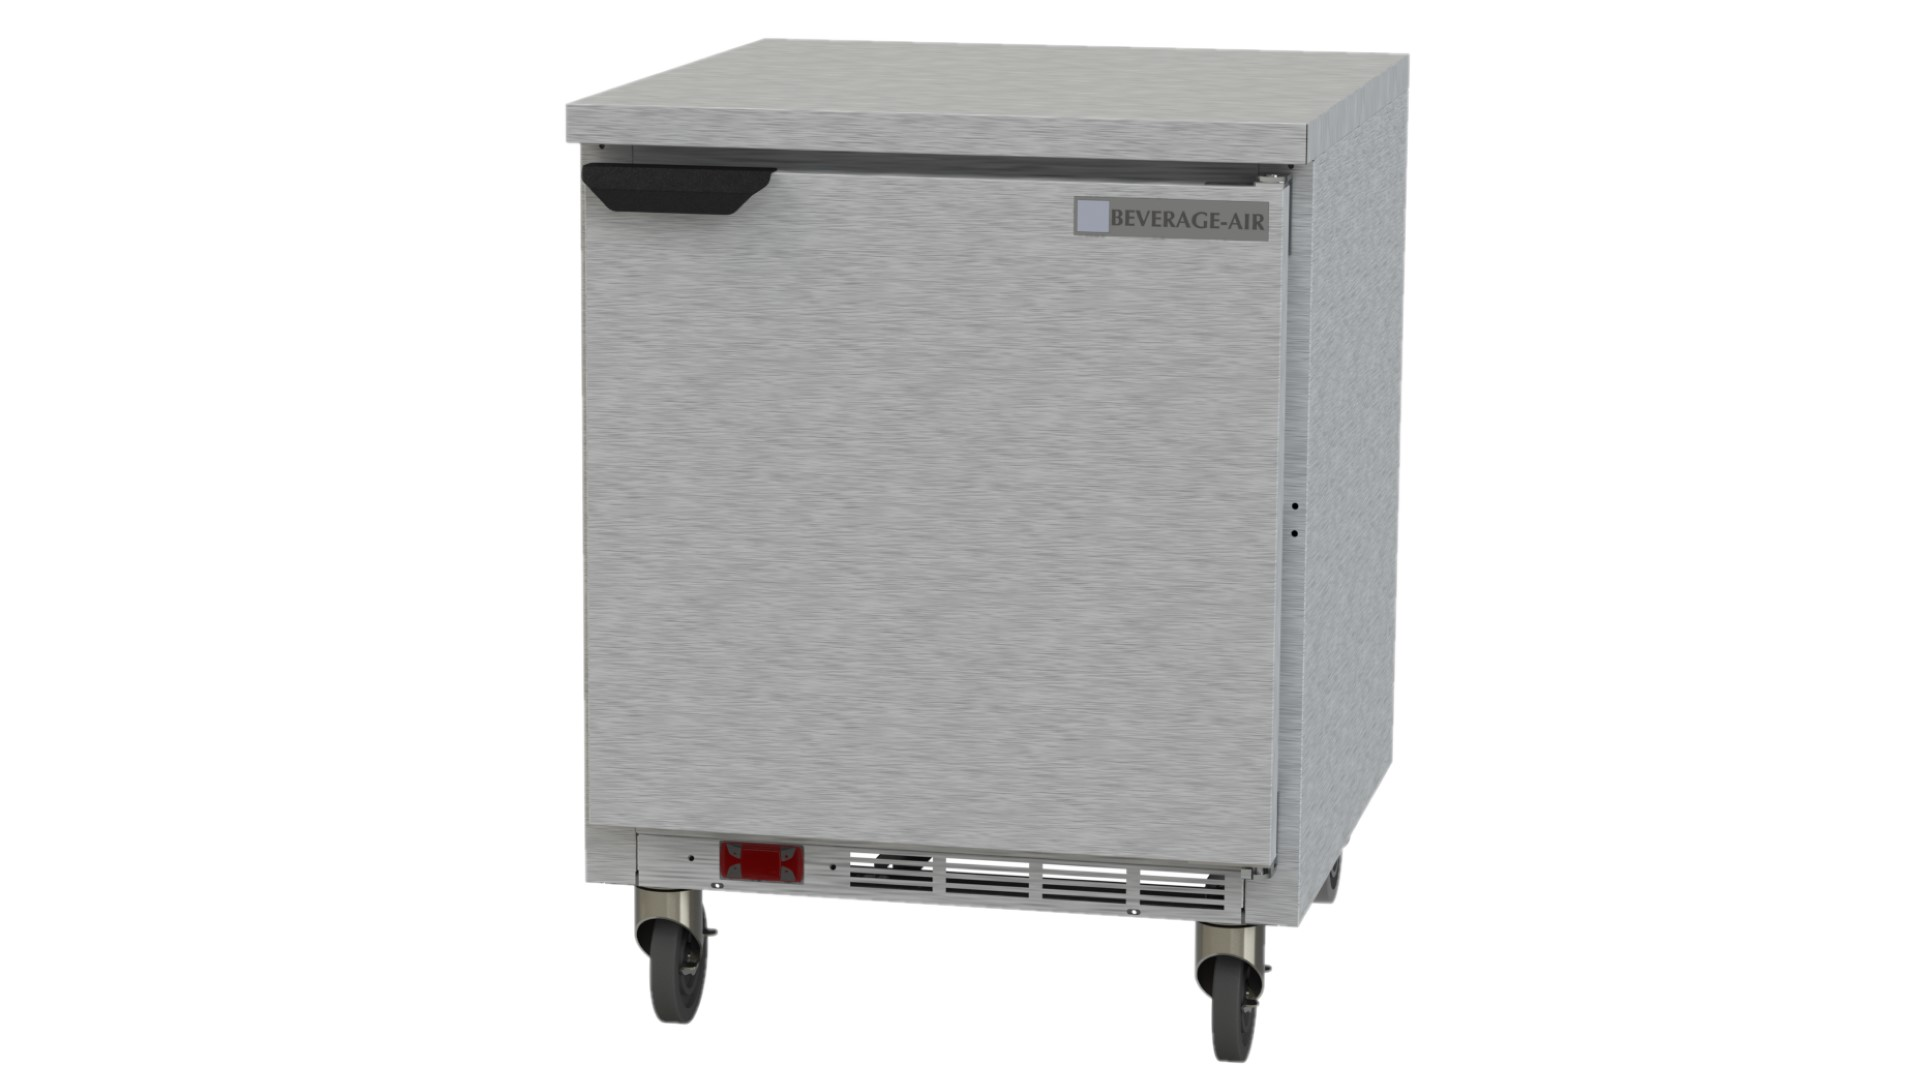 Beverage Air WTR27AHC-FLT Worktop Refrigerator 27"